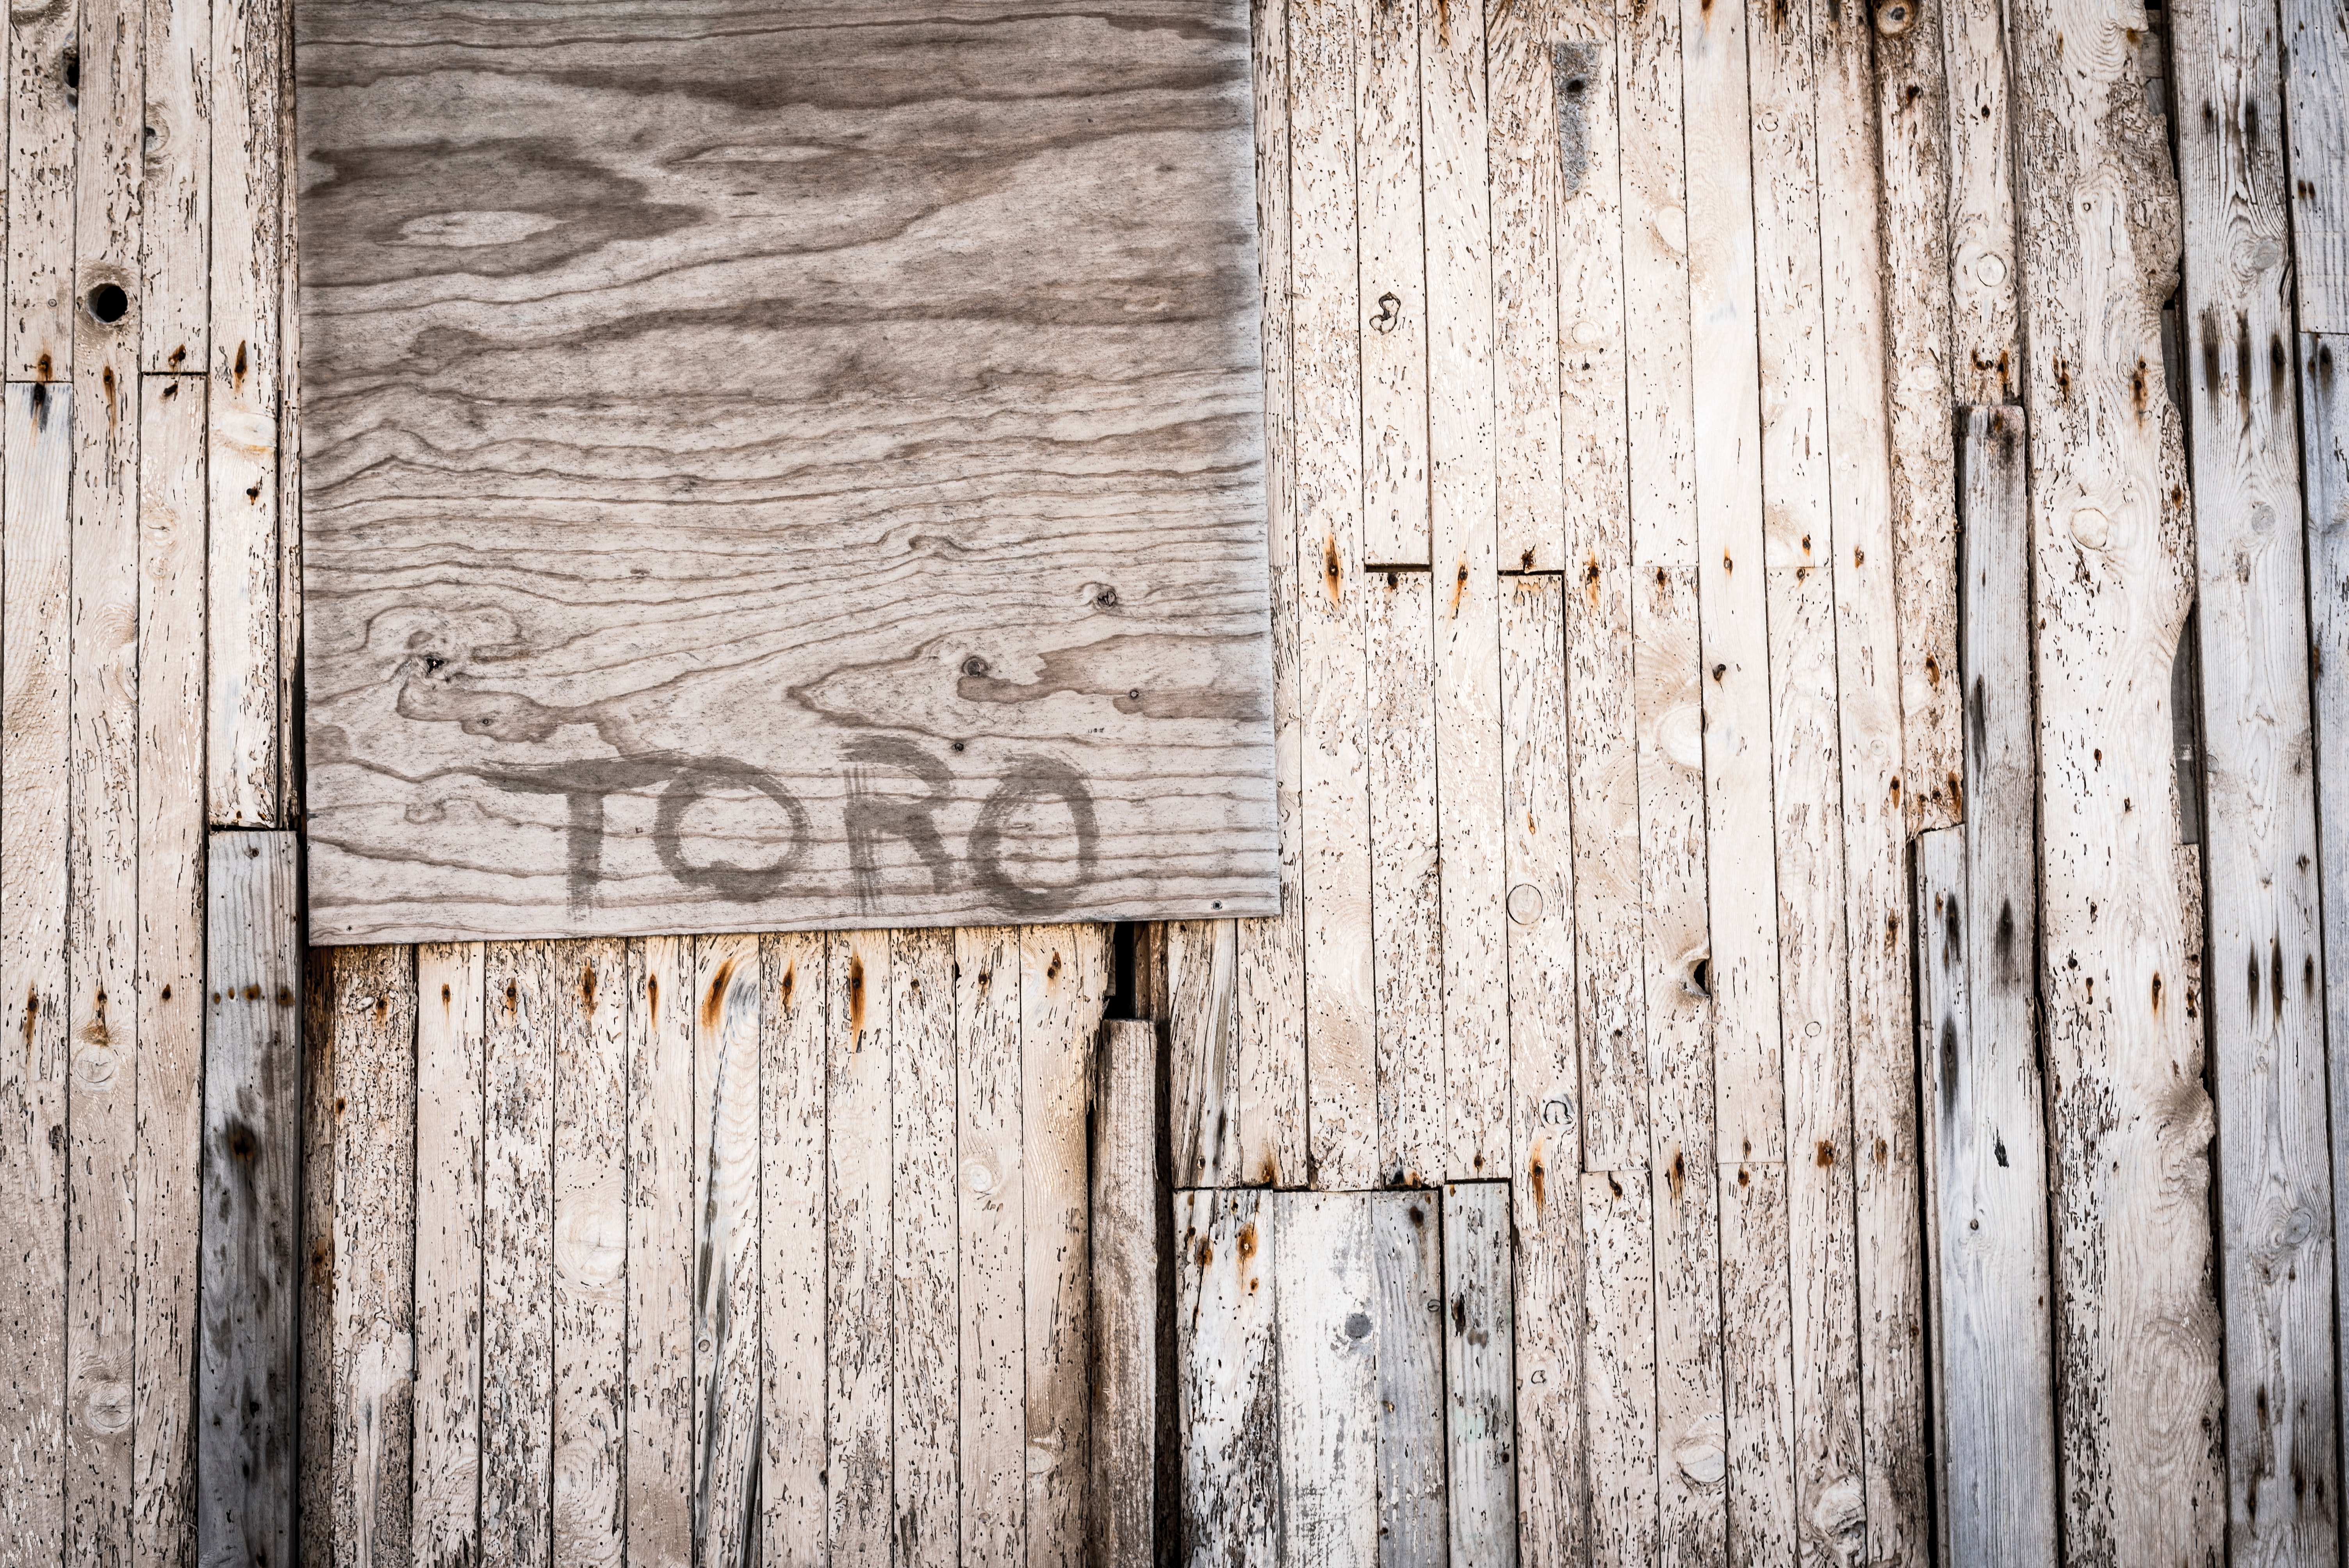 Brown Toro Painted Wooden Wall, Board, Door, Rough, Rustic, HQ Photo